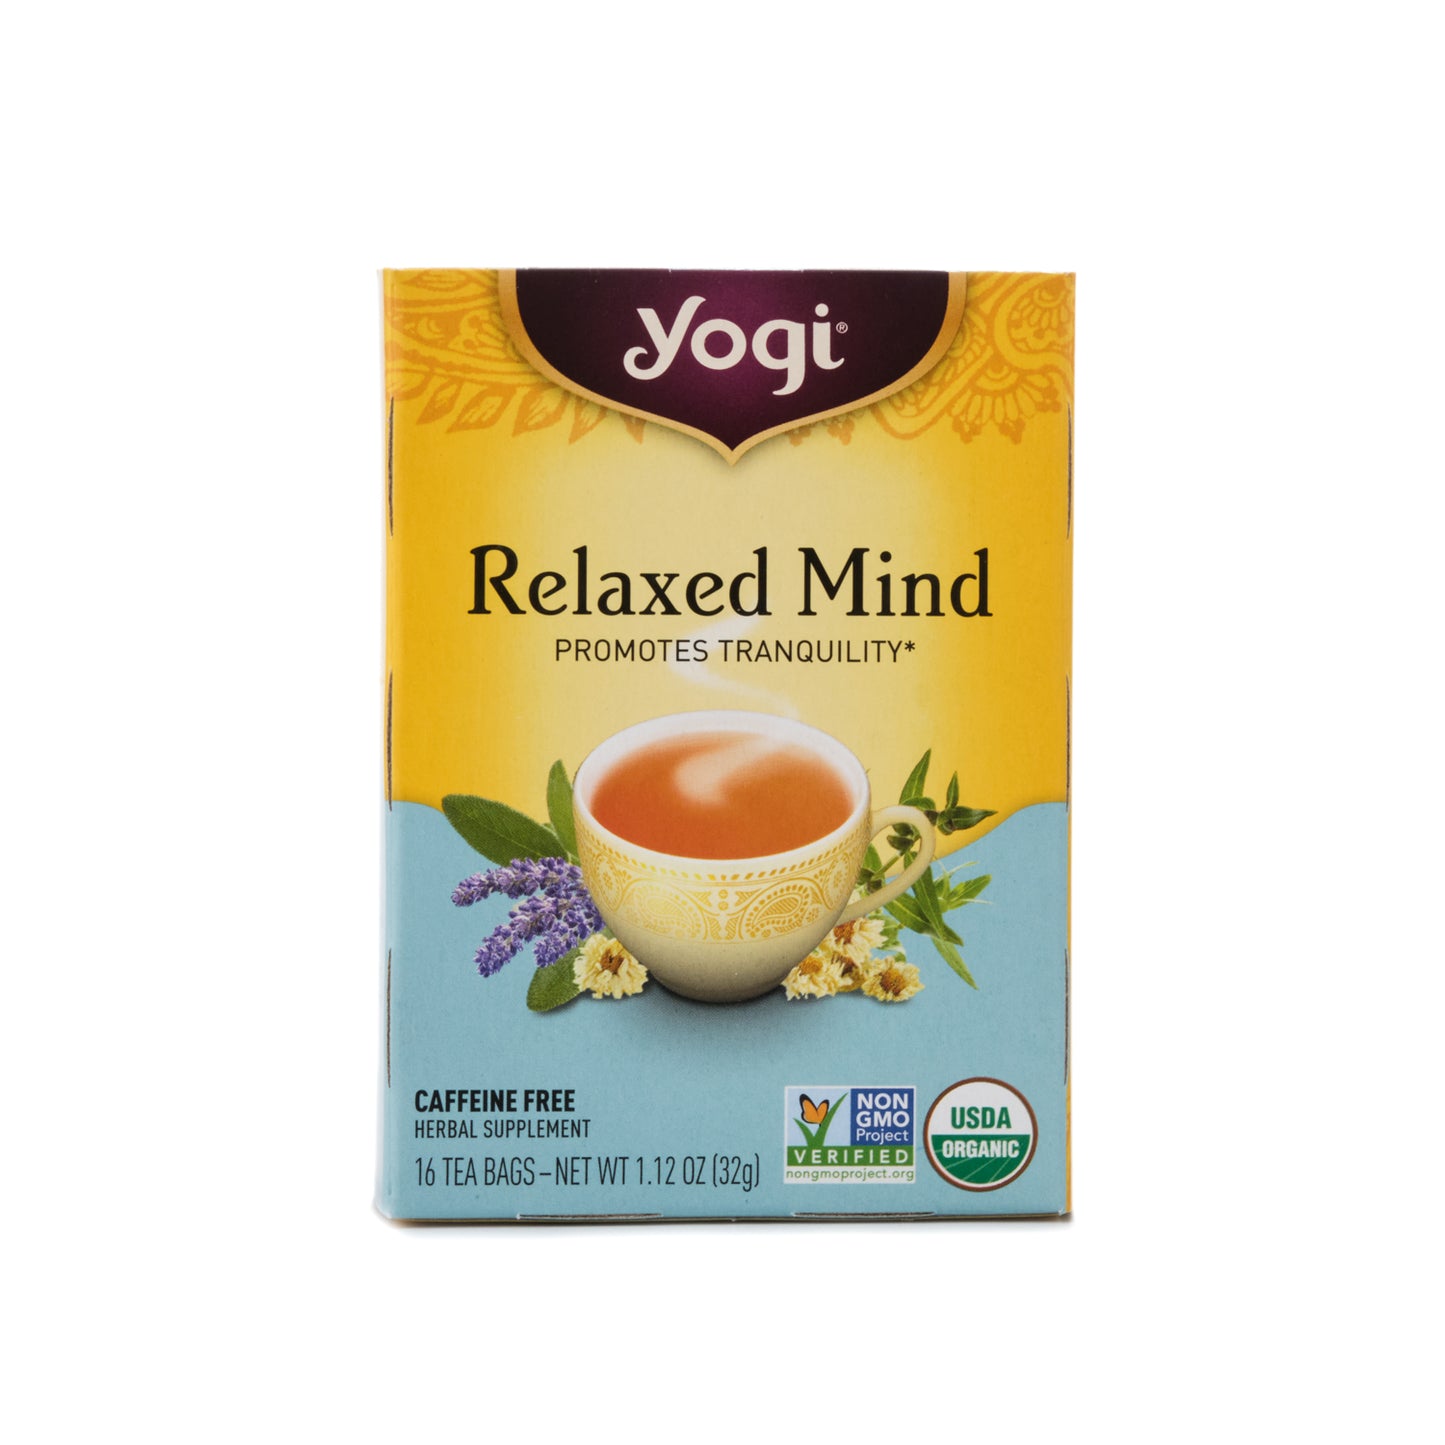 Yogi Relaxed Mind 16 tea bags